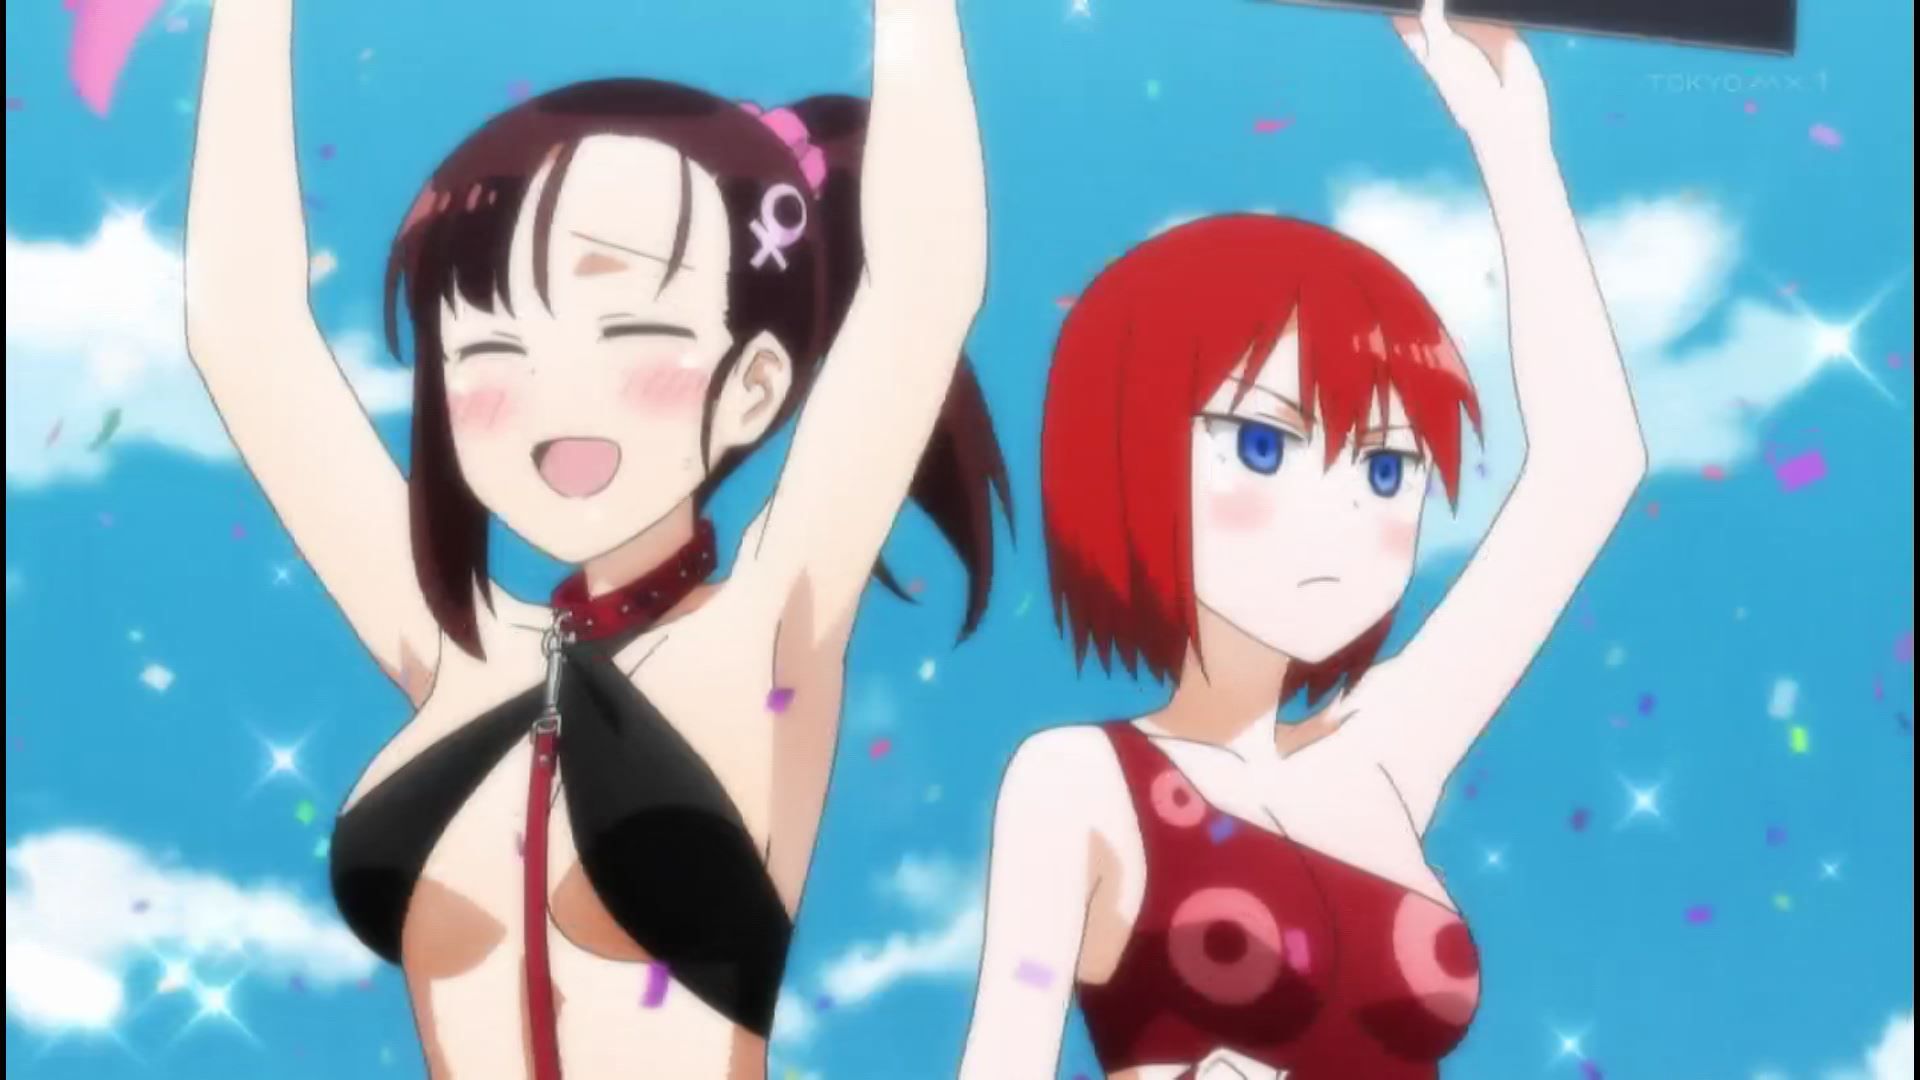 Anime [Shimarenuse] Seaton Gakuen] scene that girls become insanely erotic costumes in episode 12 21